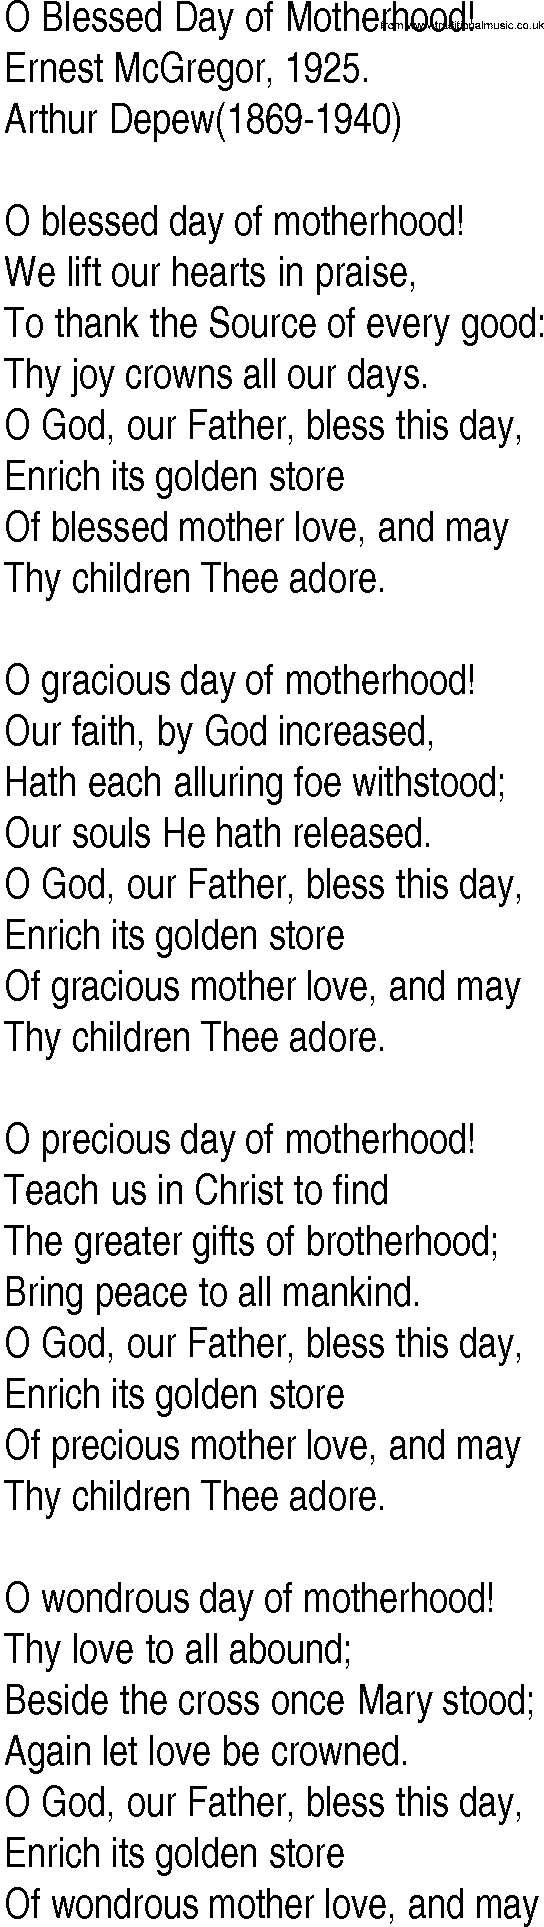 Hymn and Gospel Song: O Blessed Day of Motherhood! by Ernest McGregor lyrics